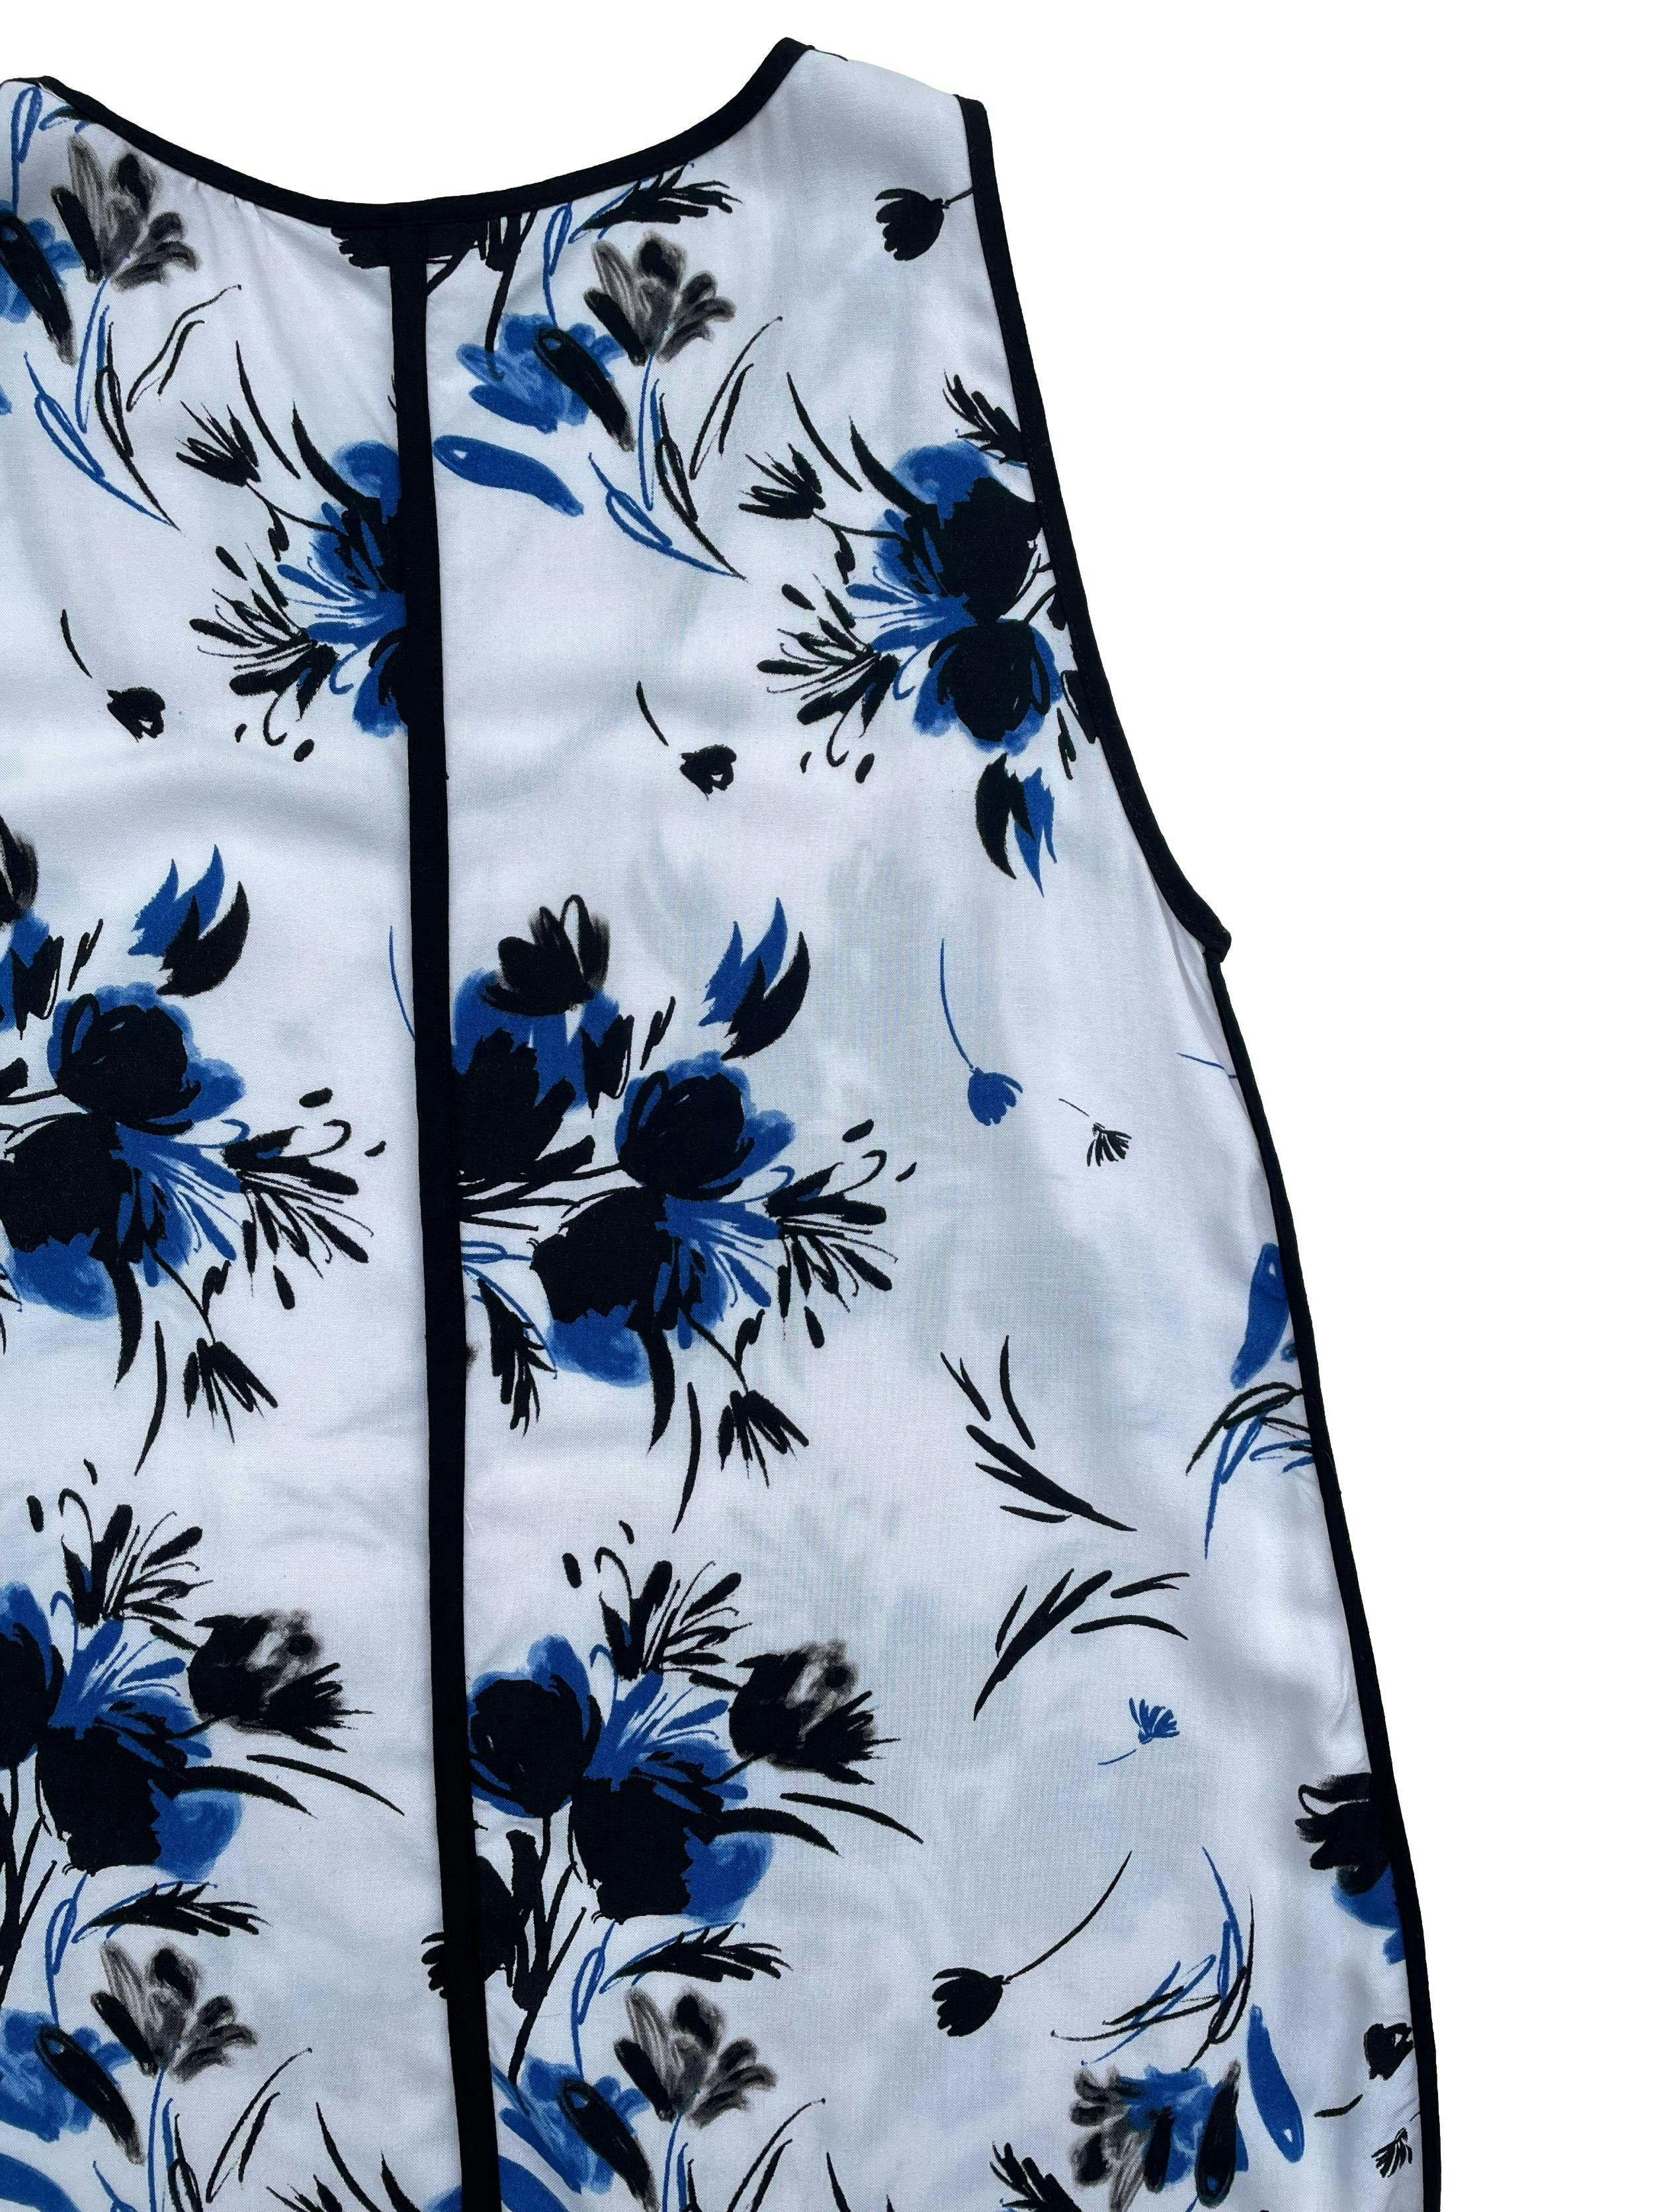 Blusa Warehouse blana con flores azules y negras, tela fresca, ribetes negros. Busto 88cm Largo 60cm